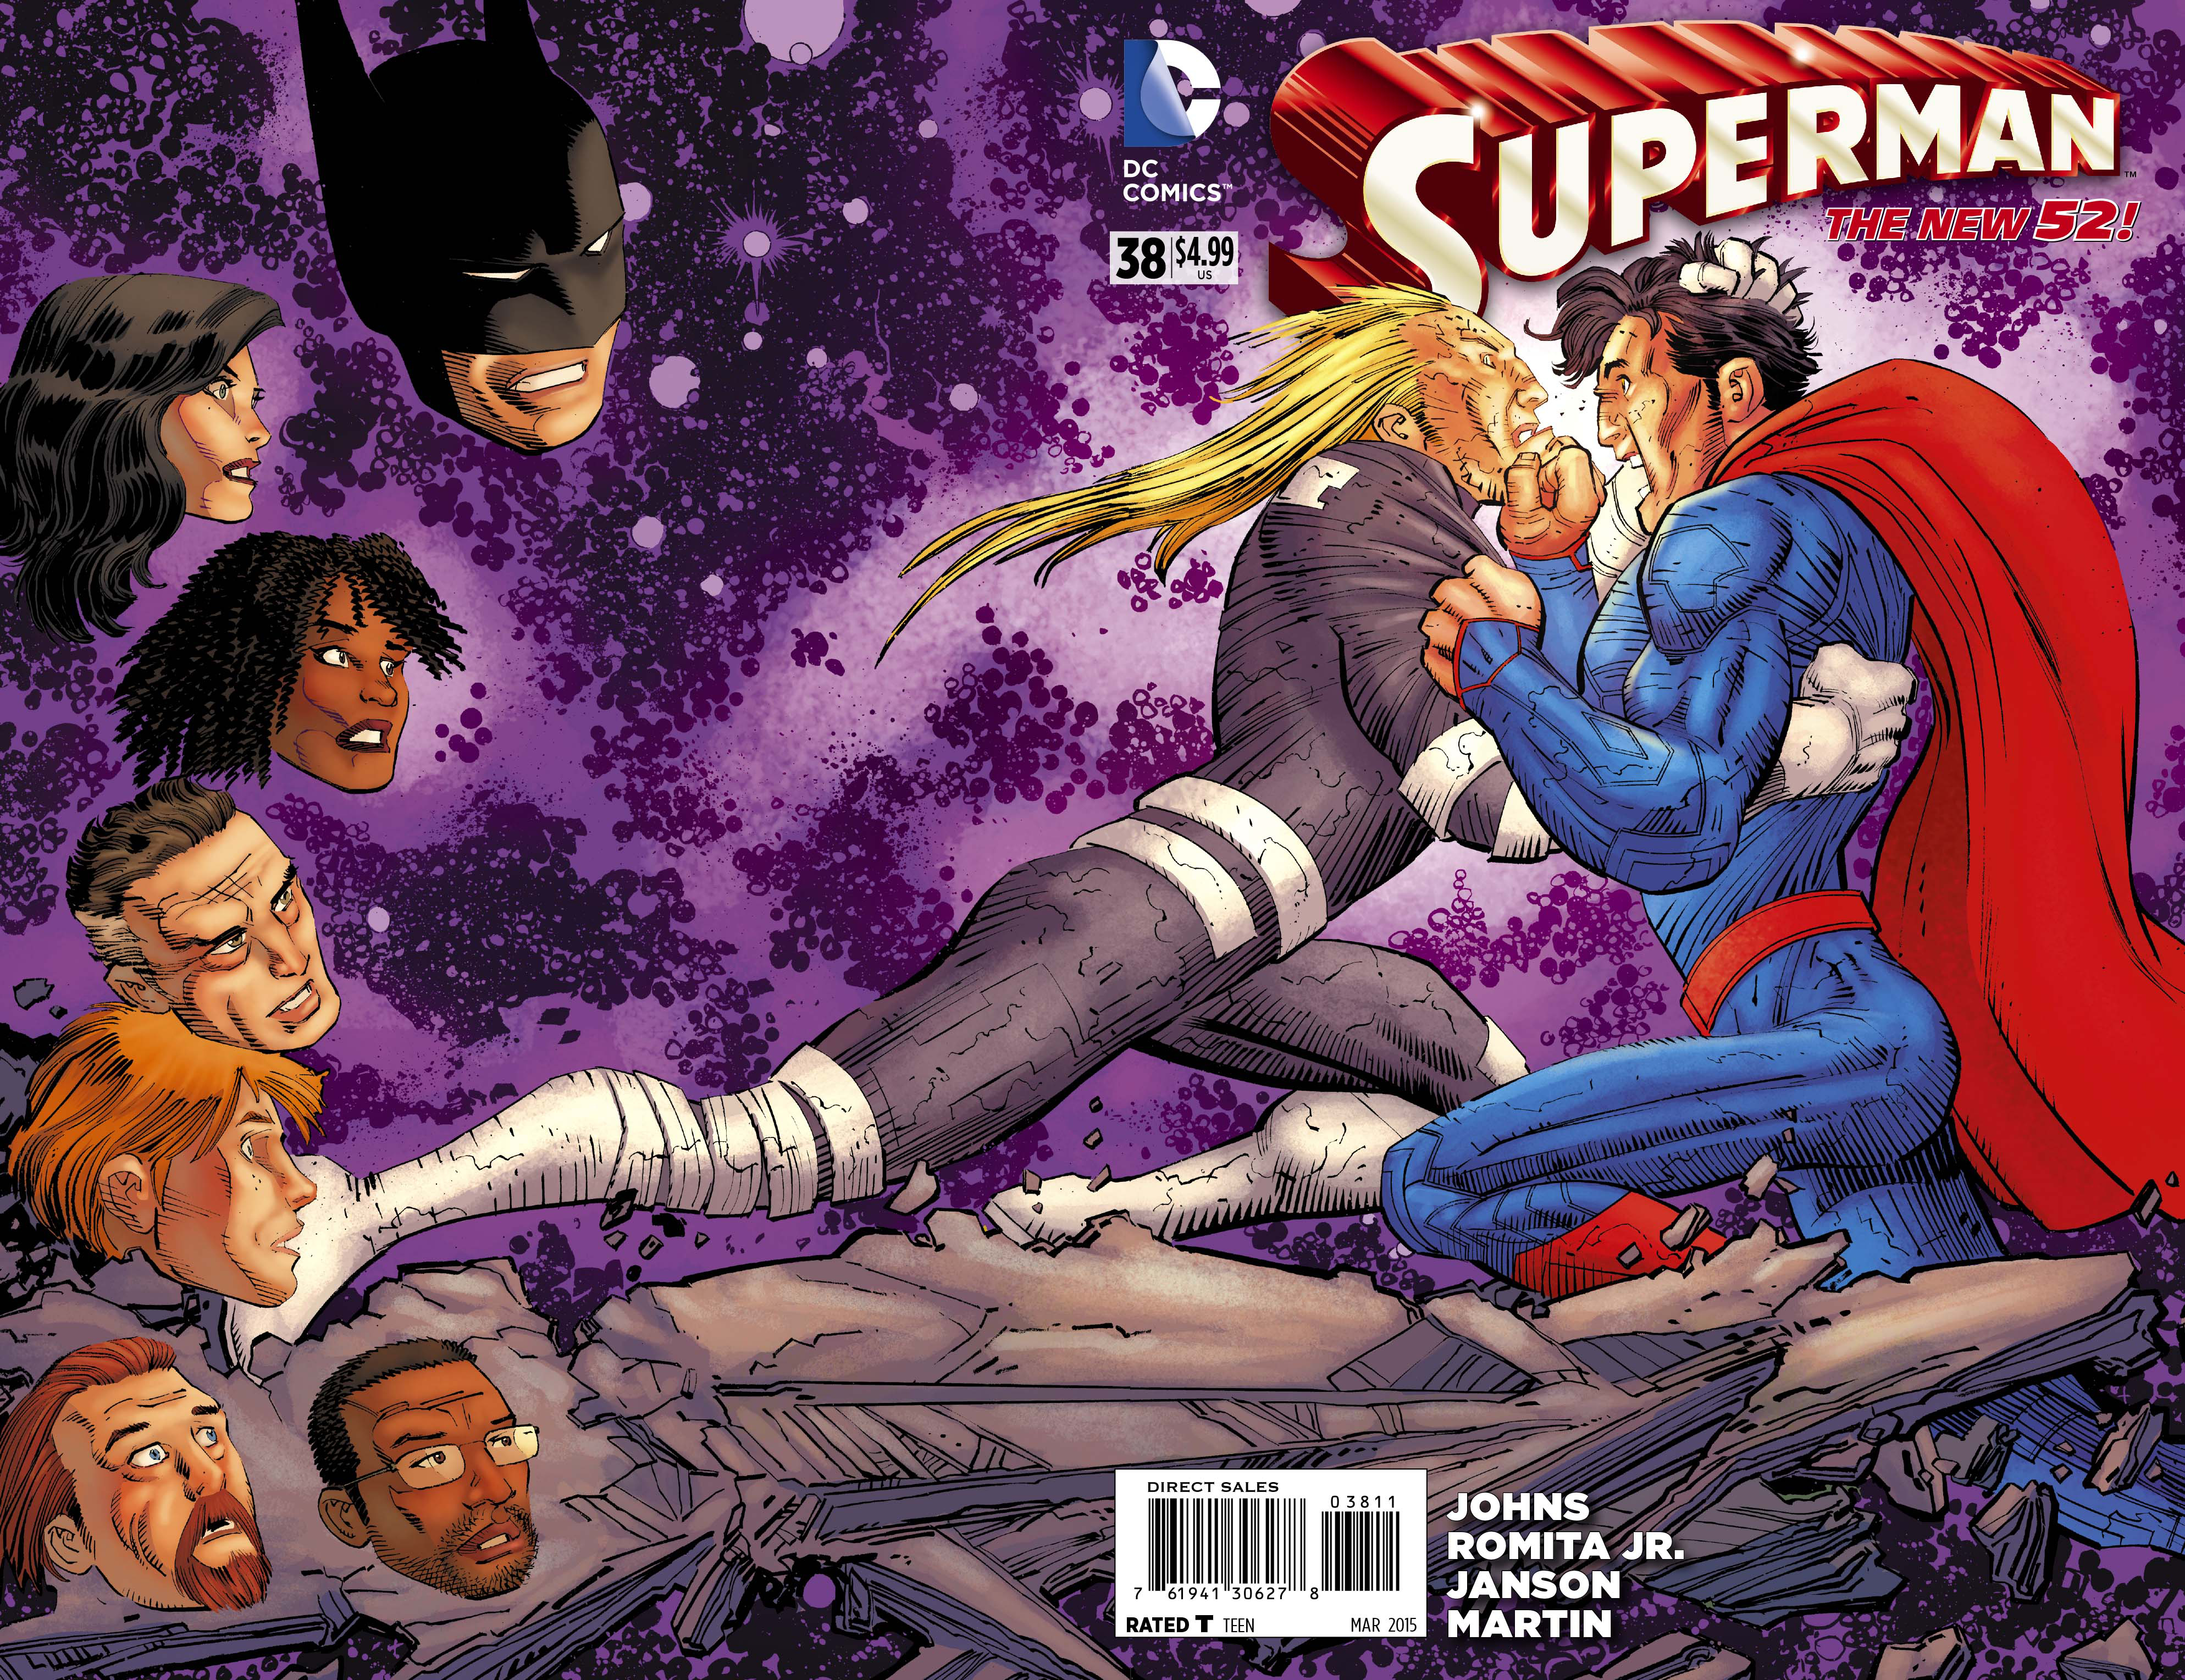 SUPERMAN #38